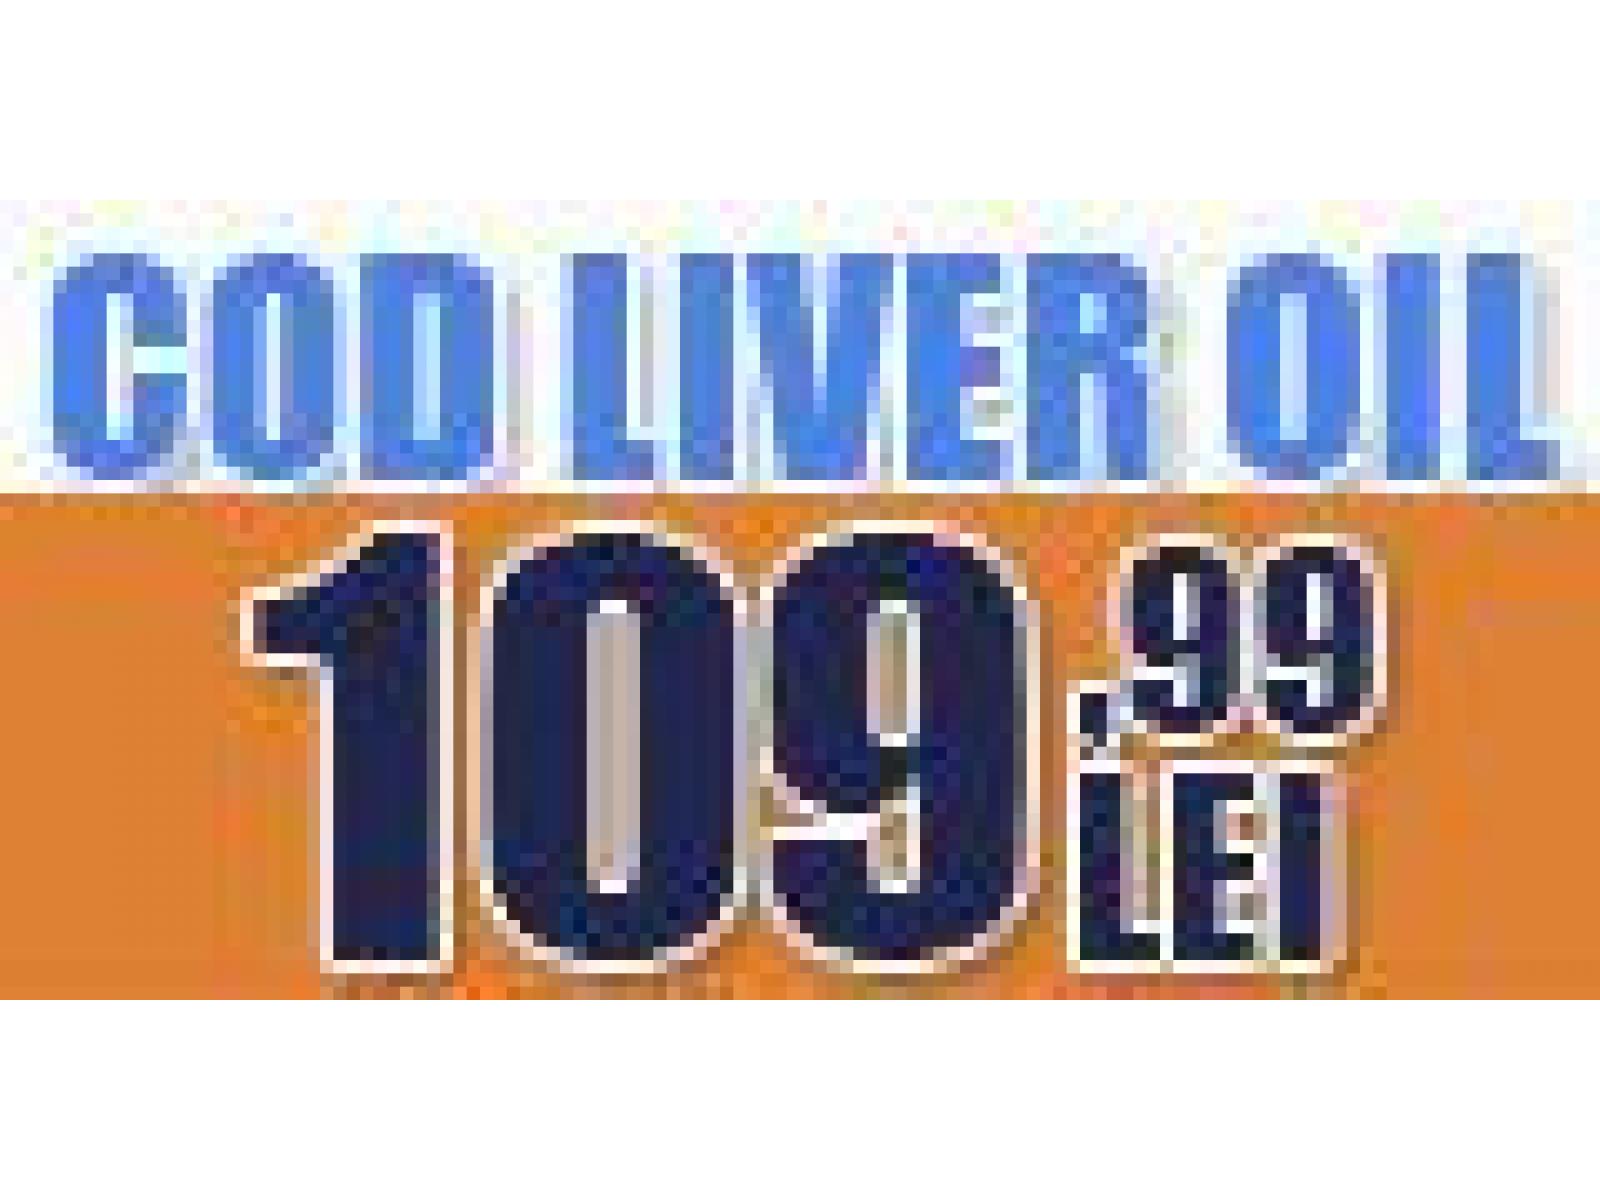 Remedii Online - cod-liver-oil-120x60-remedii-online.ro.jpg